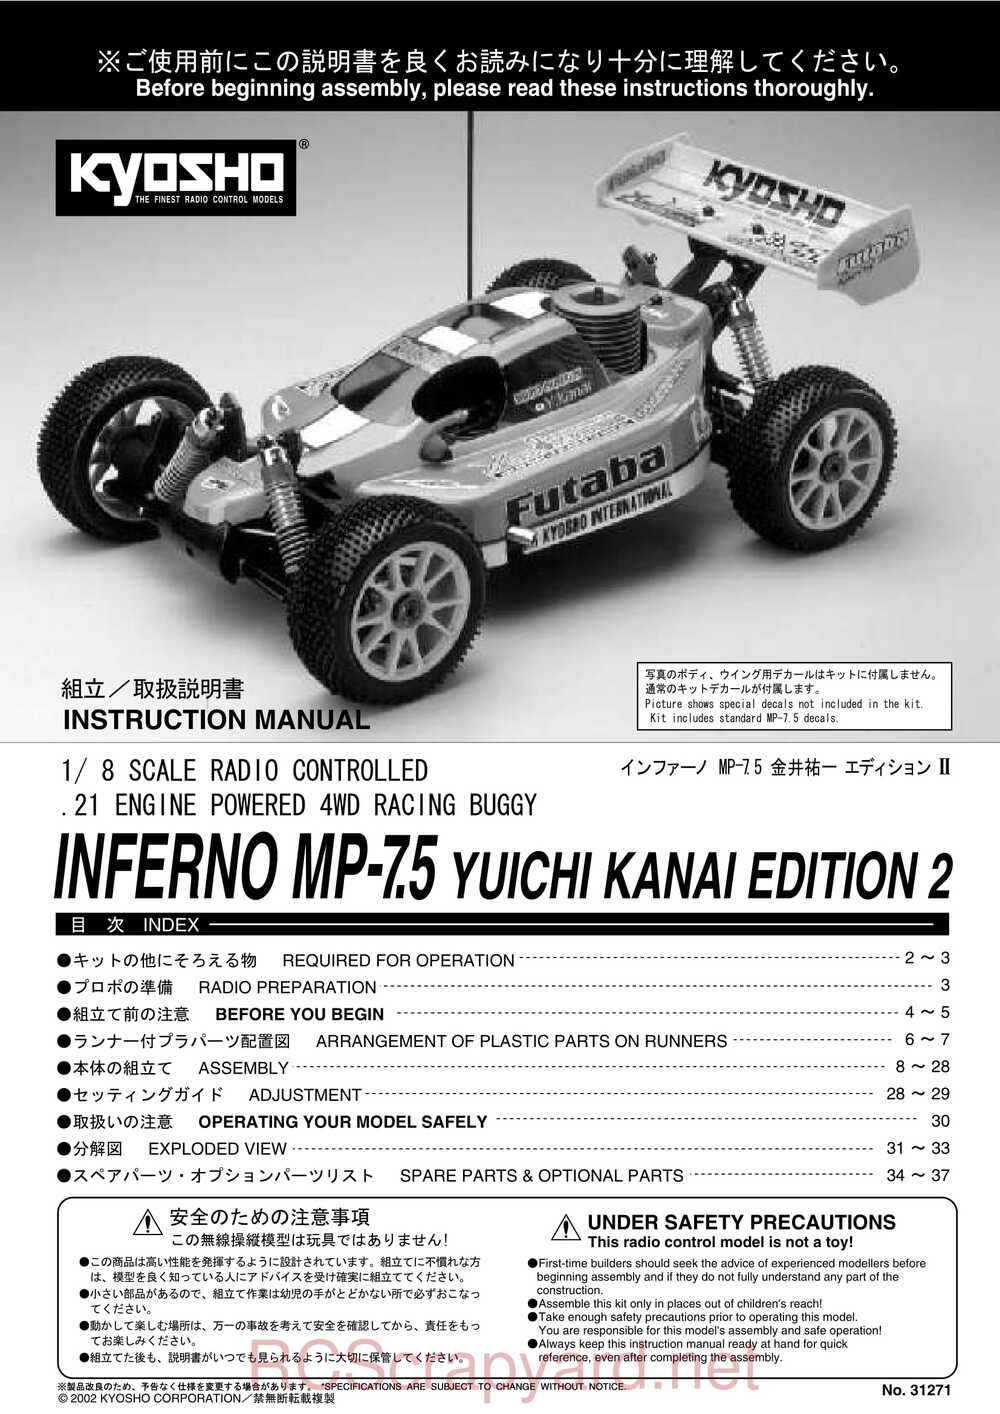 Kyosho - 31271 - Inferno-MP-7-5-Yuichi 2 - Manual - Page 01